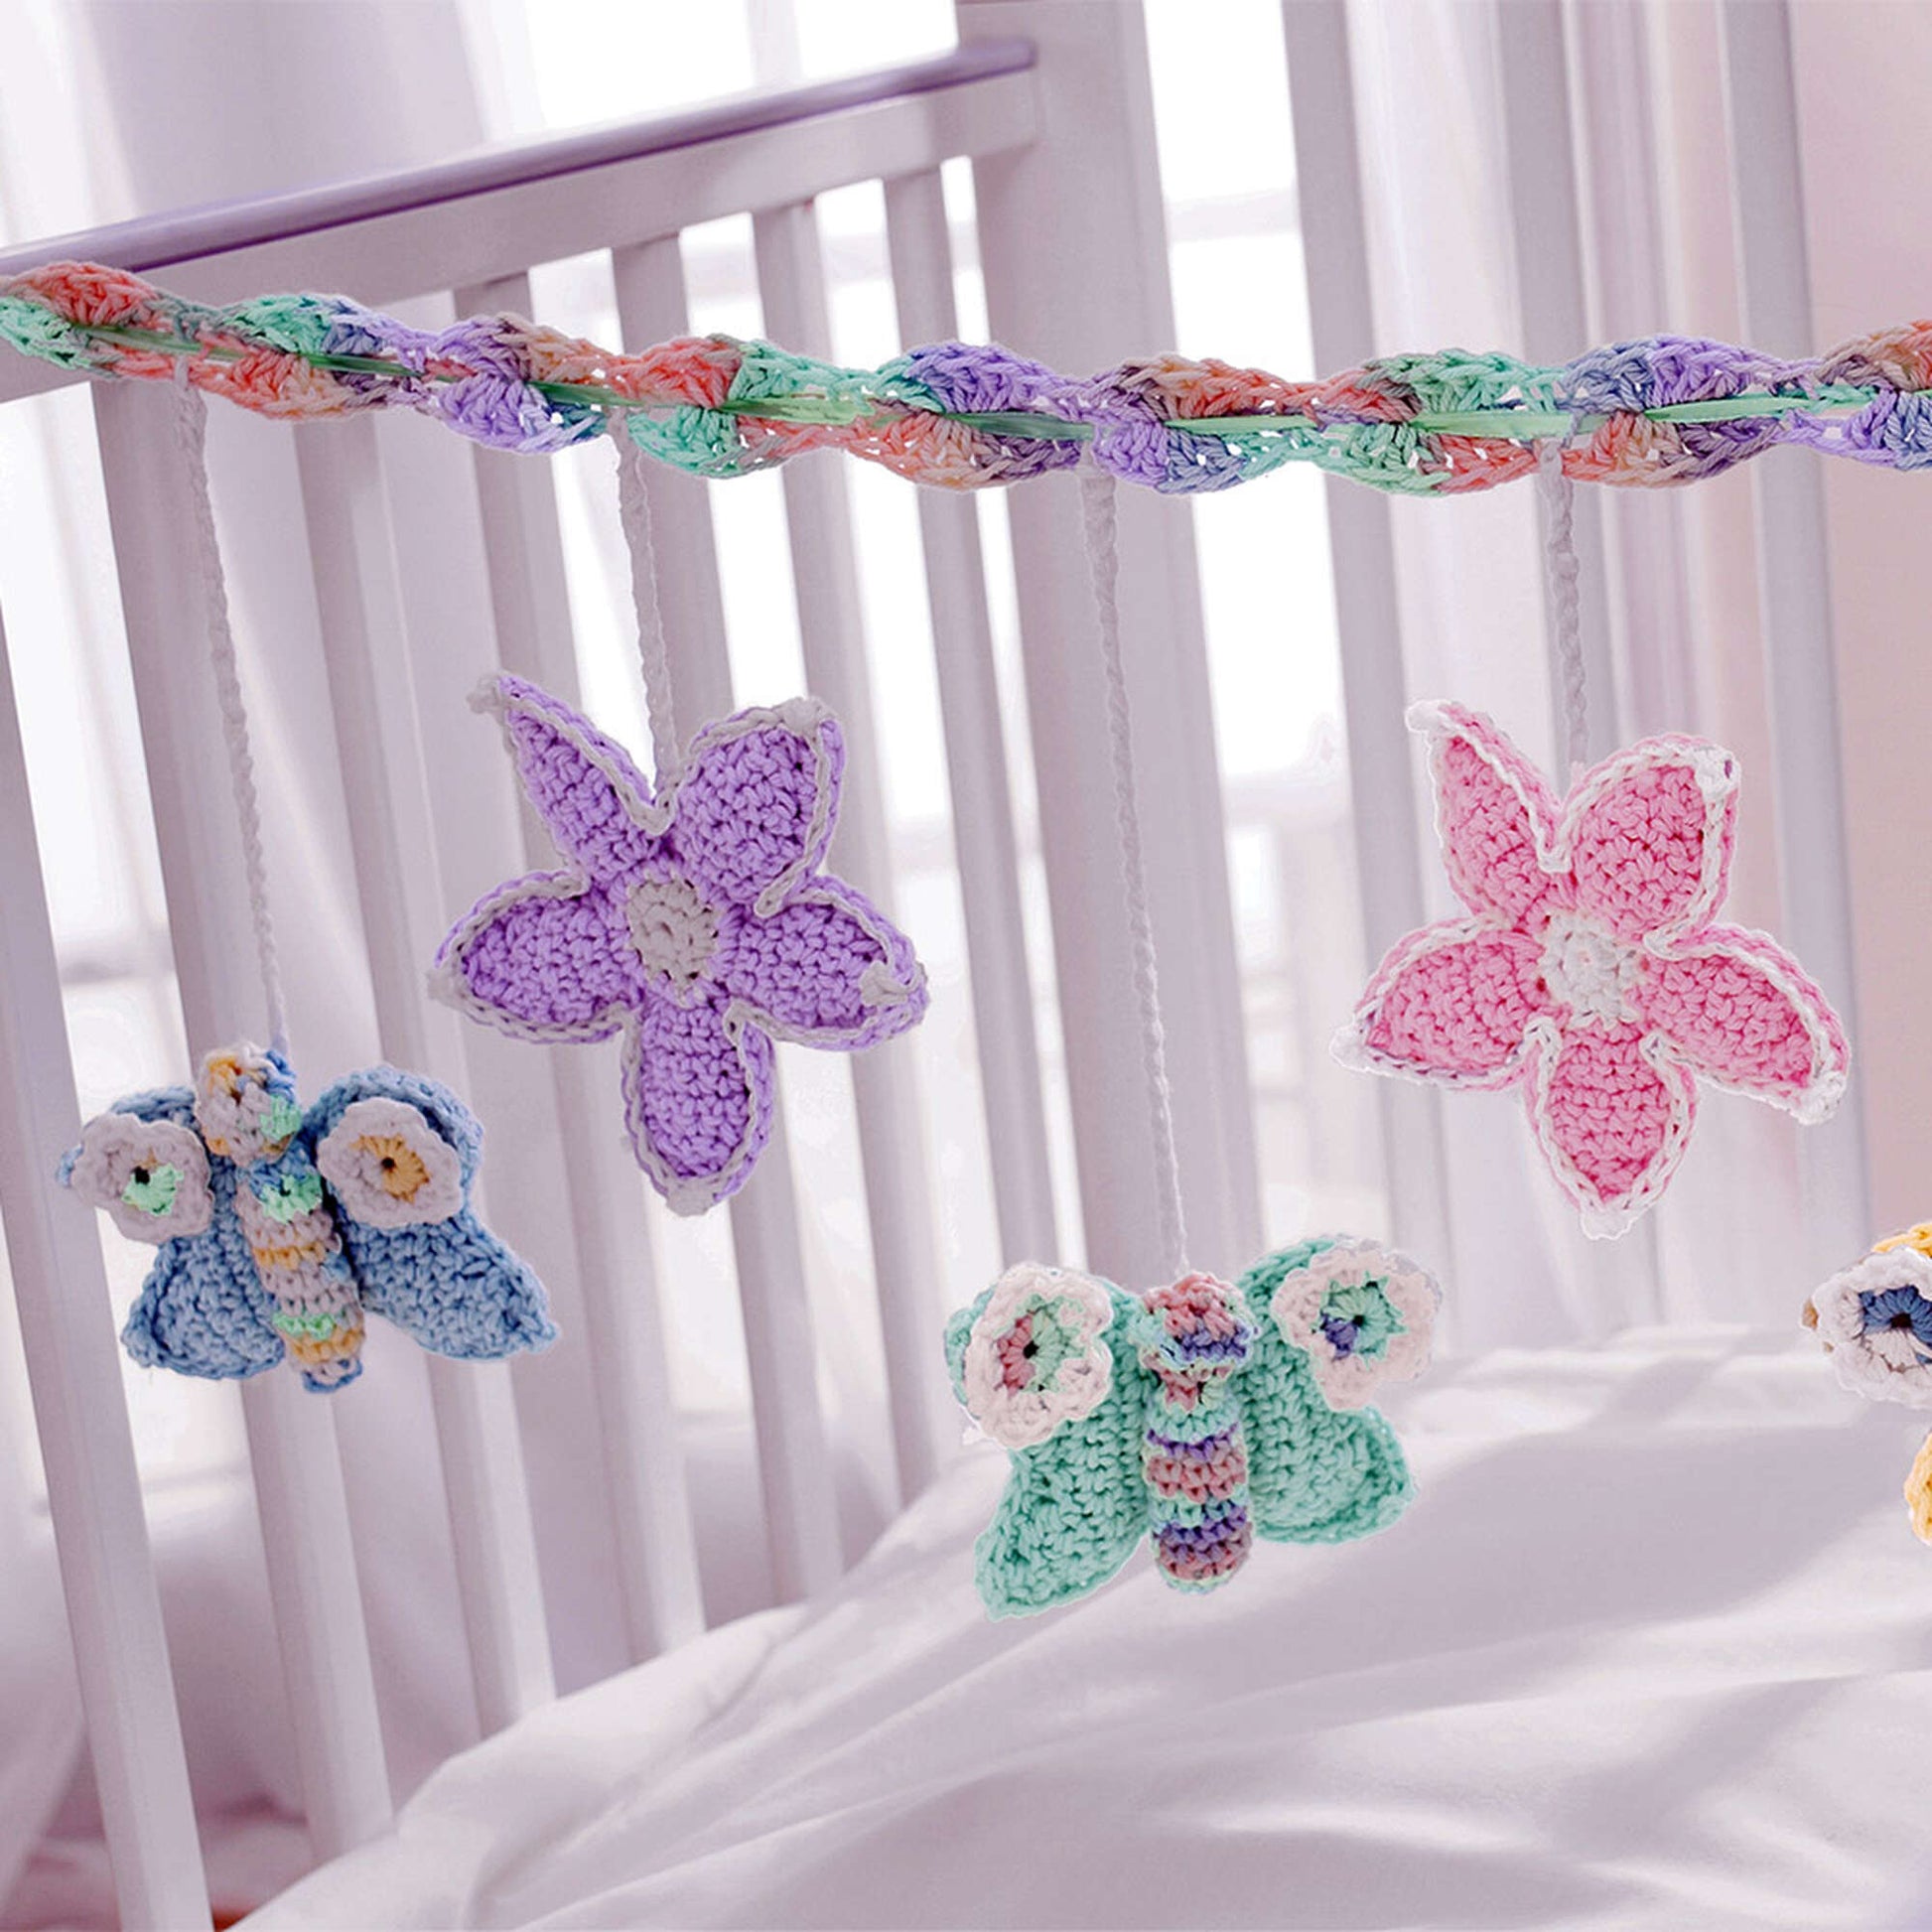 Free Lily Sugar'n Cream Baby's Crib Mobile Crochet Pattern